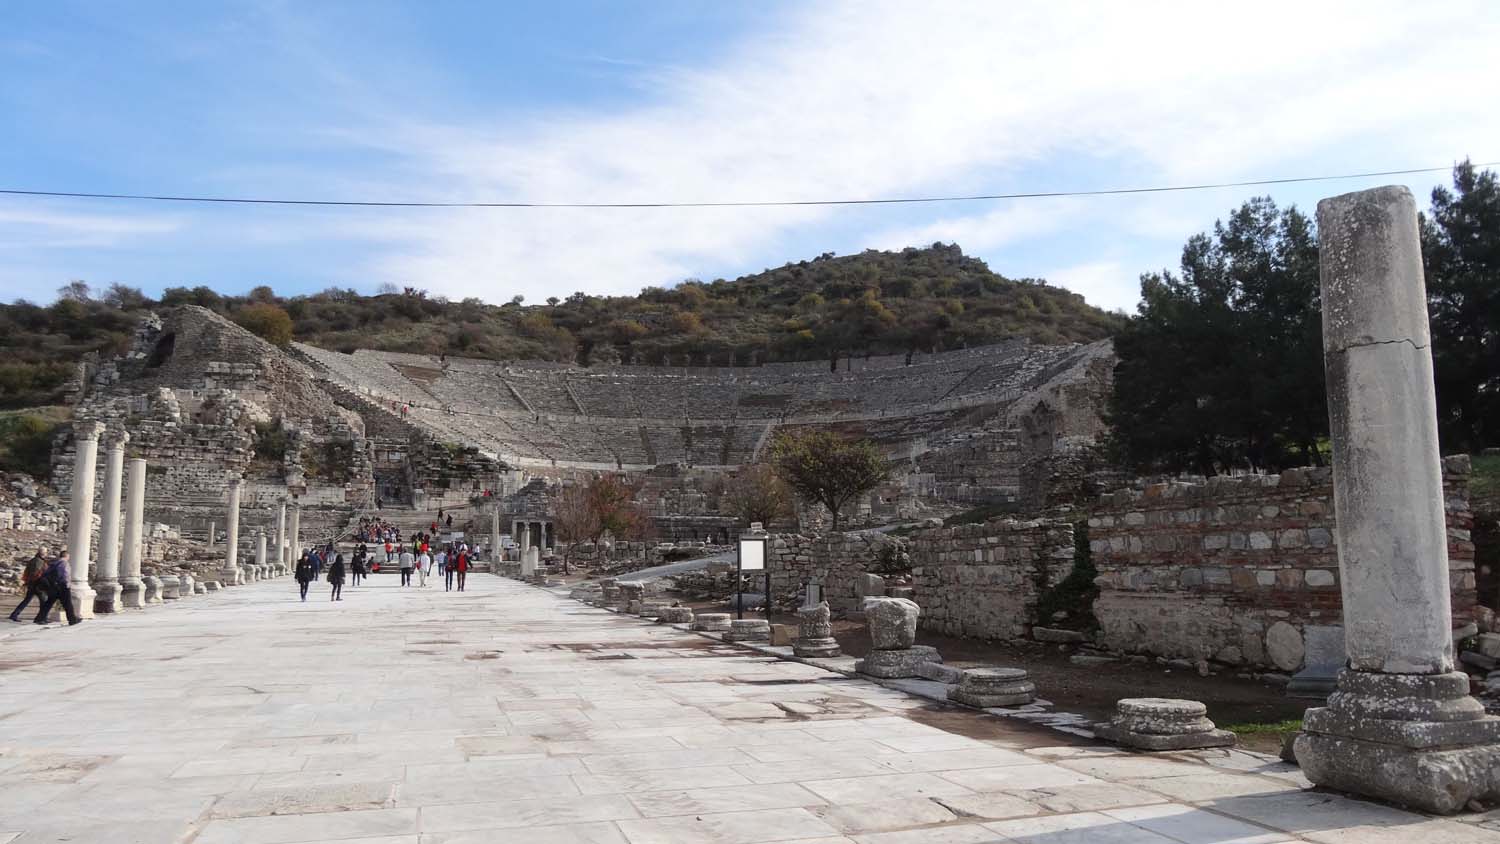 Roman theatre seating 25,000 in Ephesus